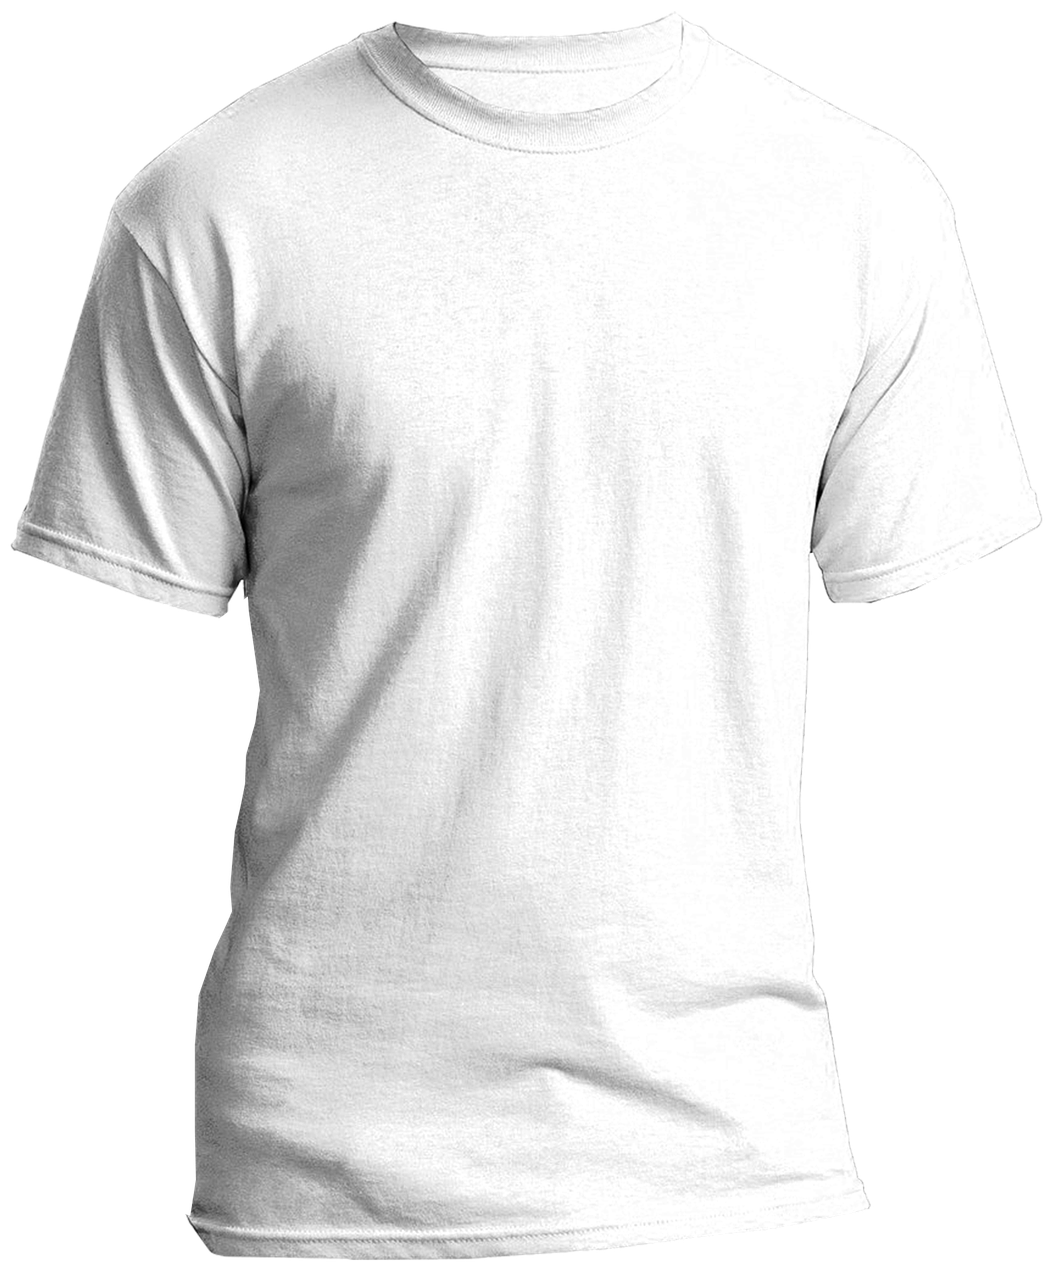 blank t shirts white free photo